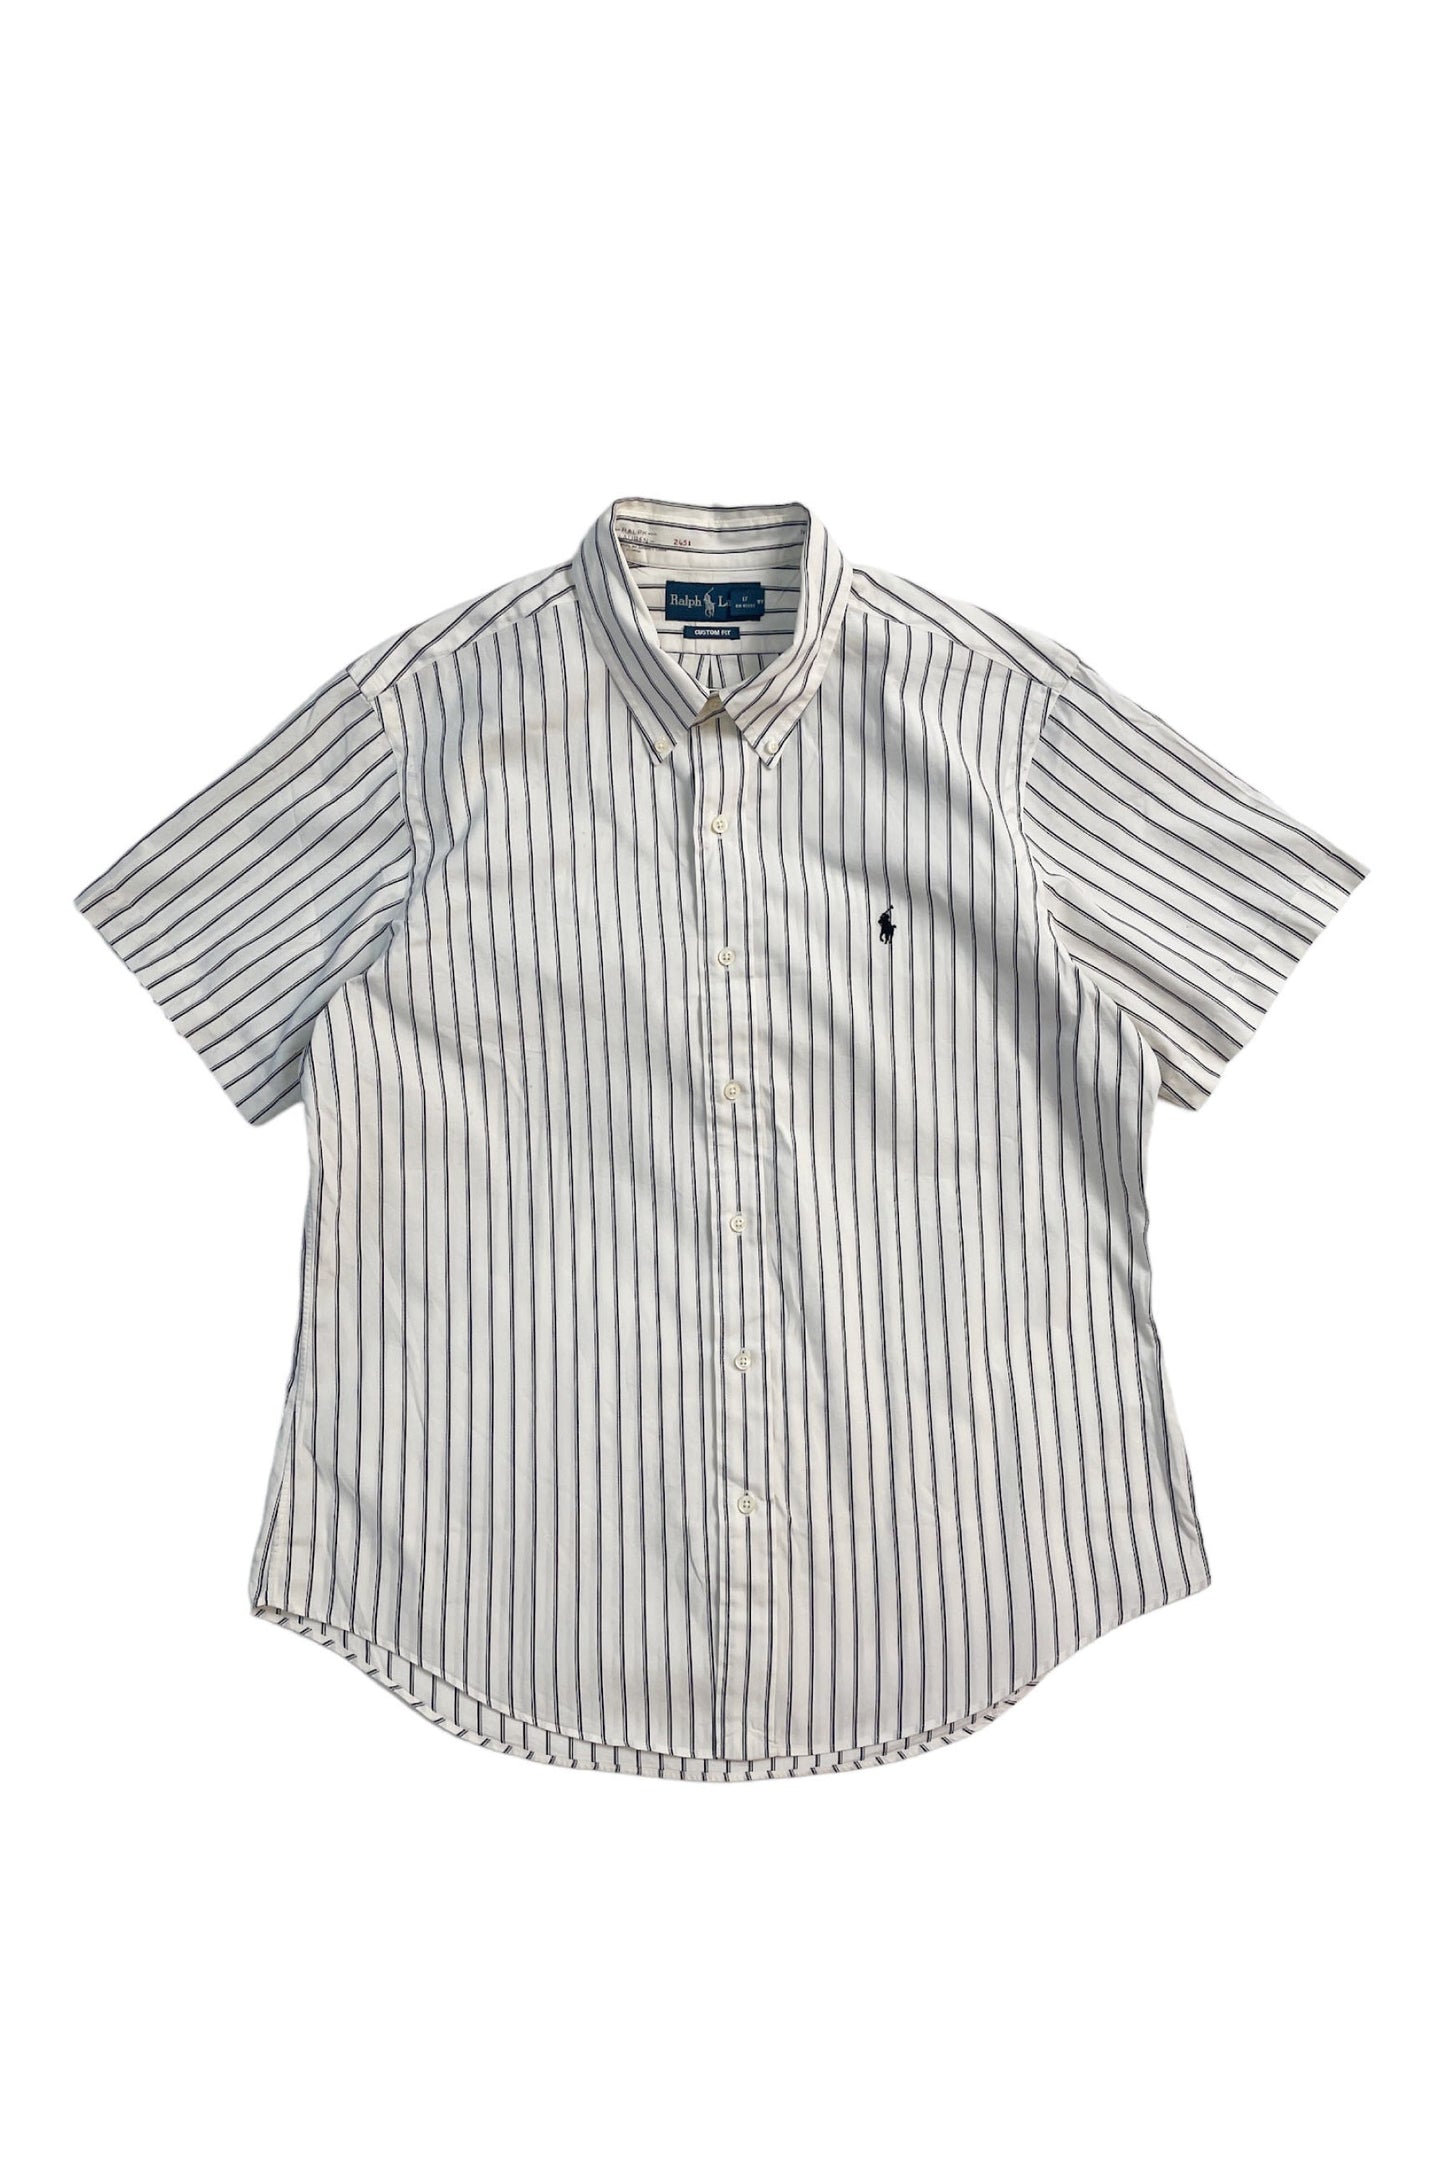 90's Ralph Lauren stripe shirt white/black